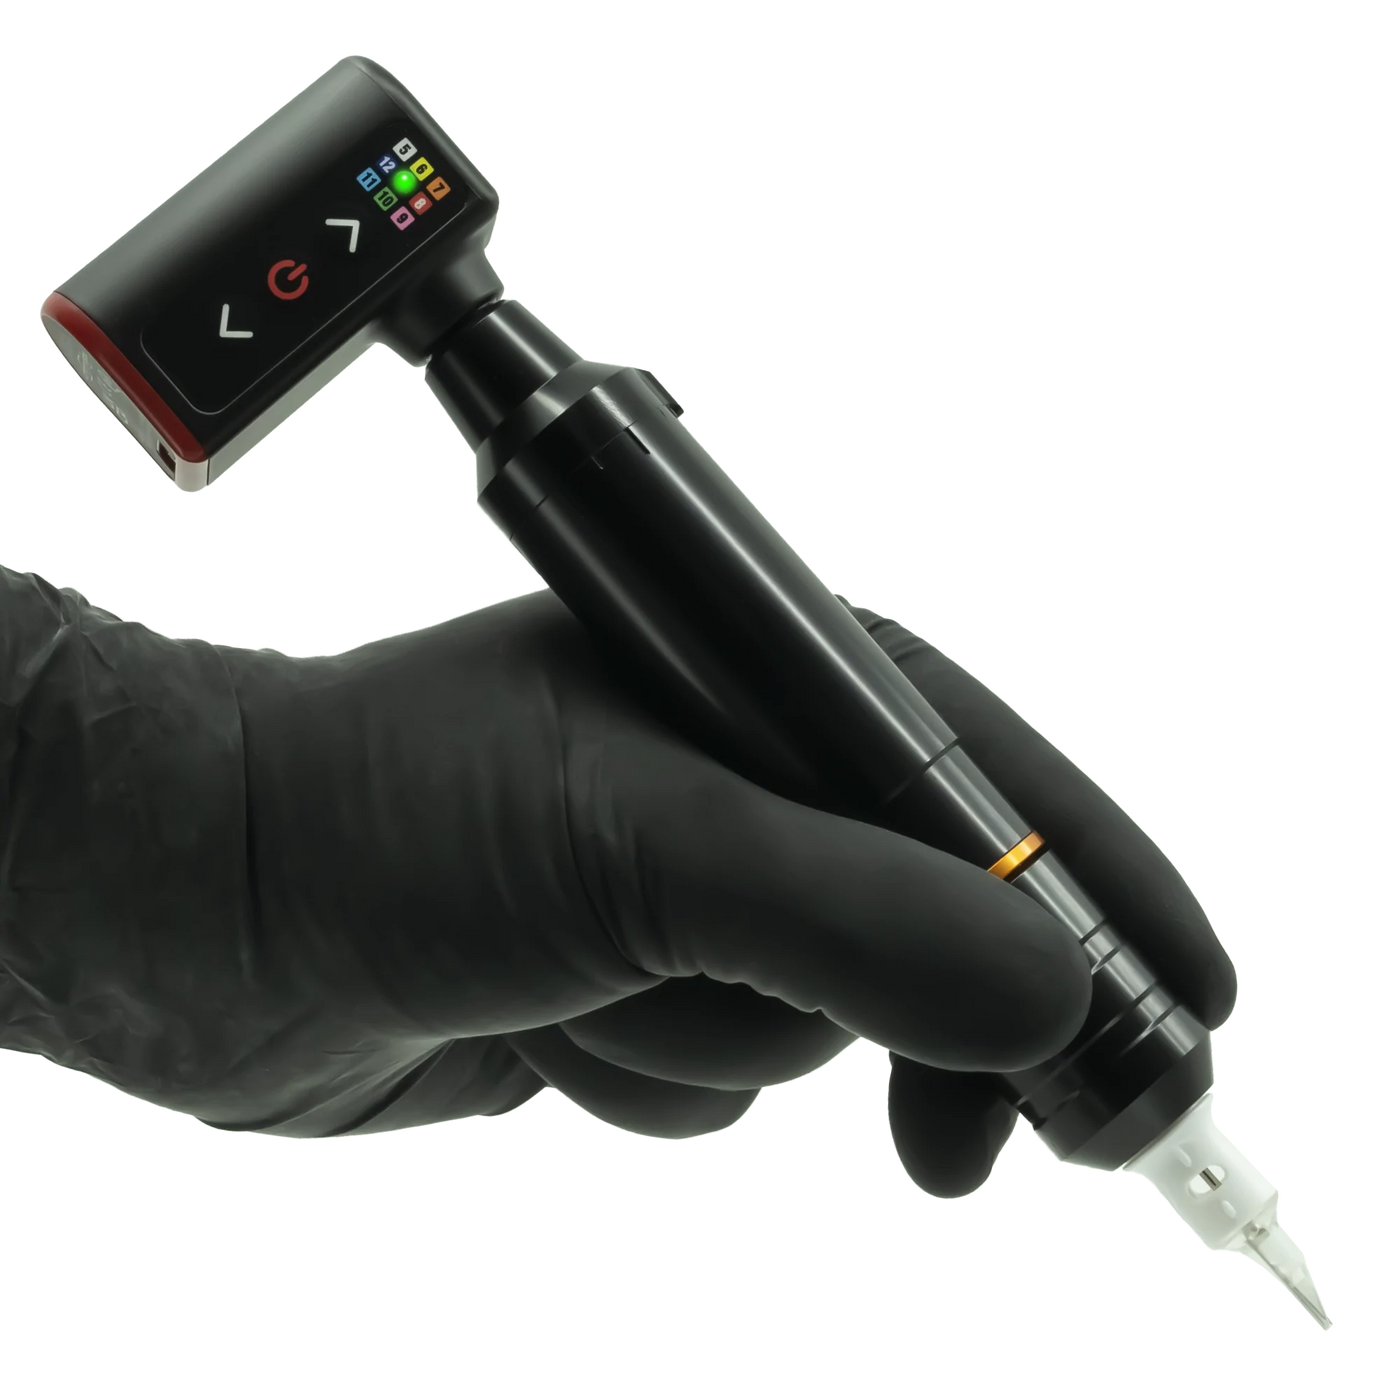 HAWK Pen  Flexible tattoo machine for more freedom